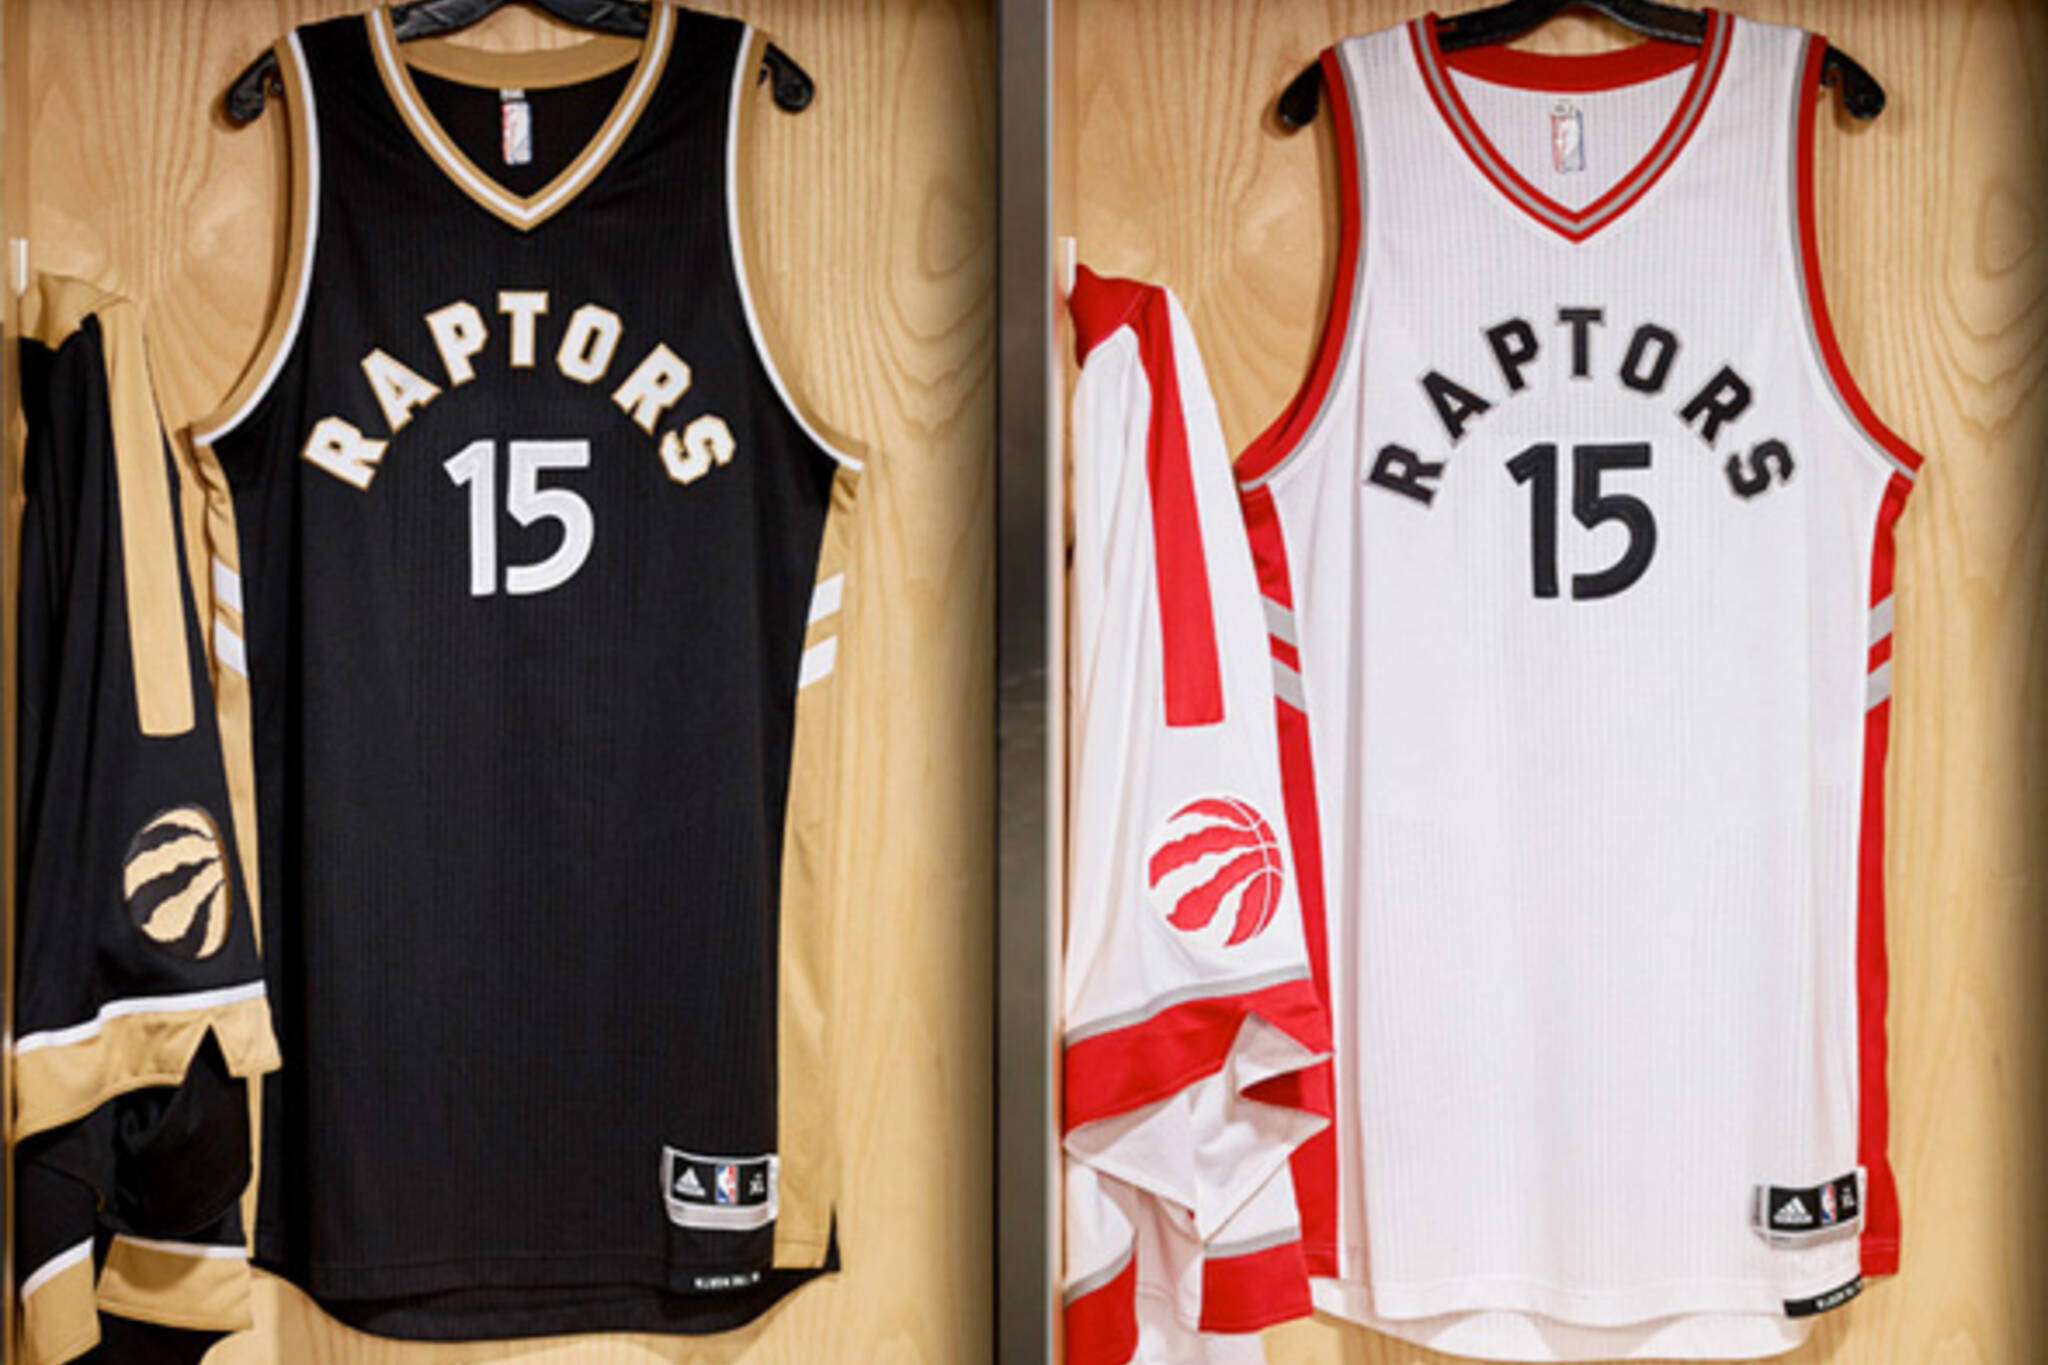 The Toronto Raptors just got new uniforms